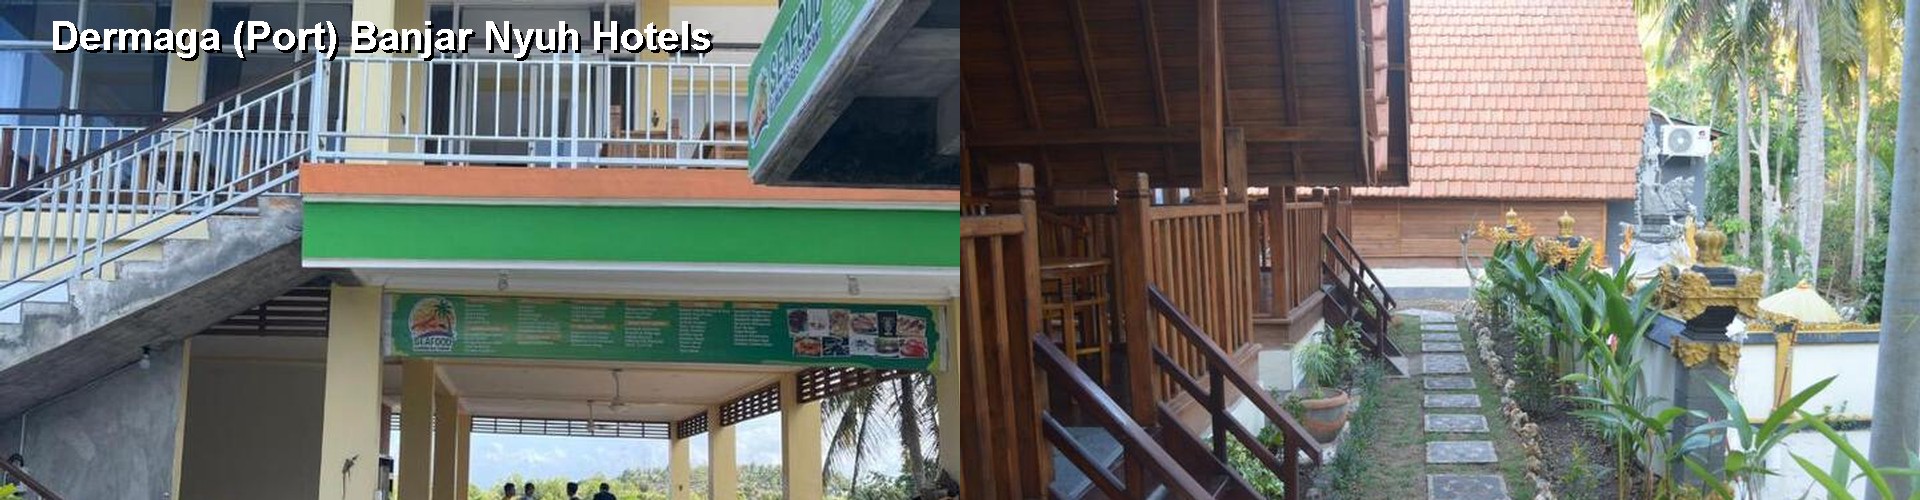 5 Best Hotels near Dermaga (Port) Banjar Nyuh